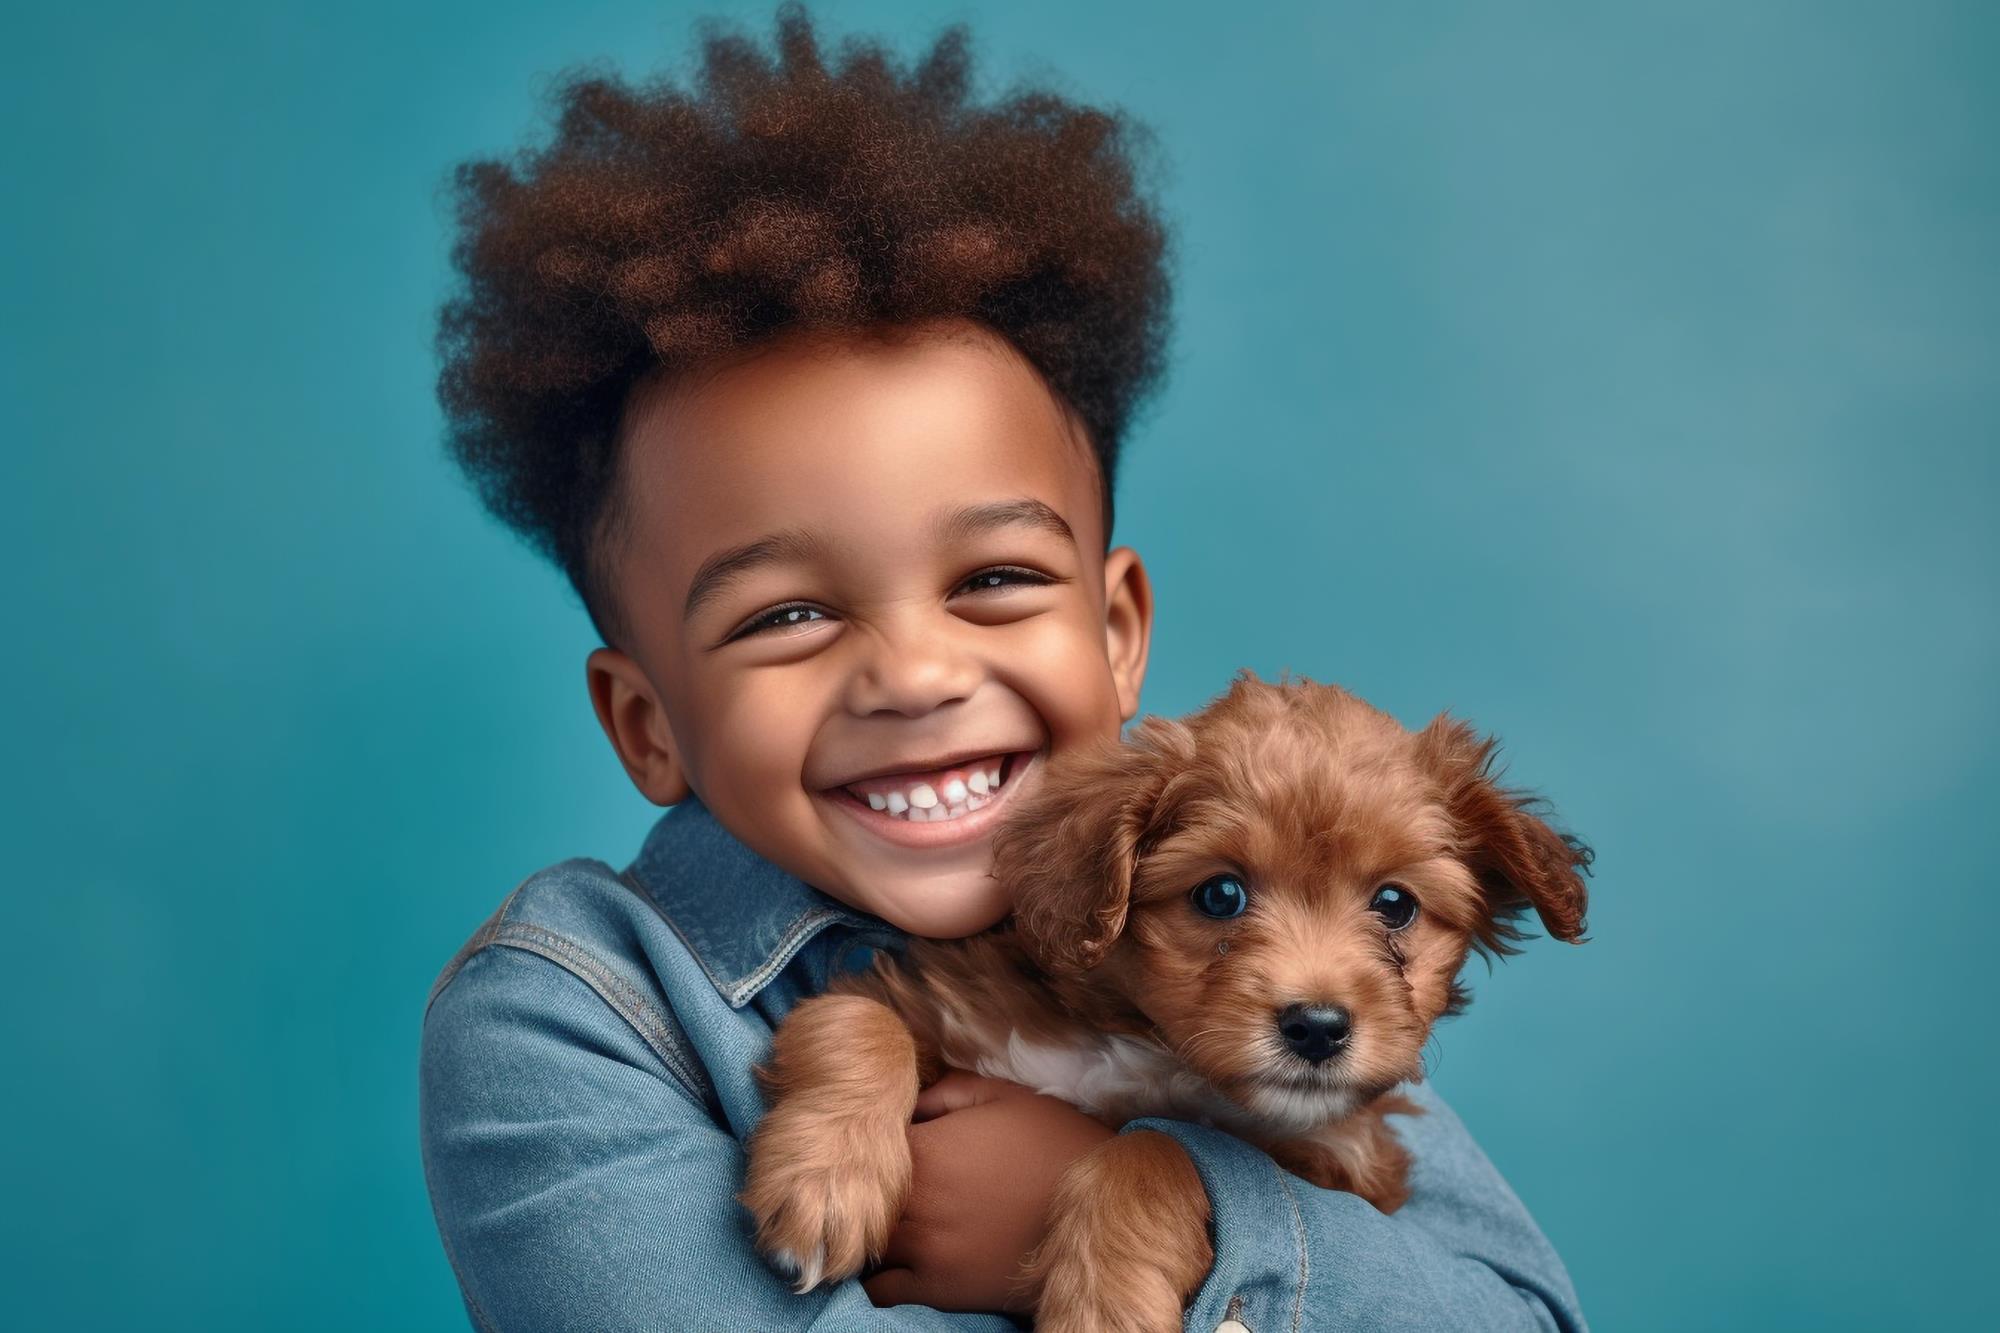 Boy holding puppy